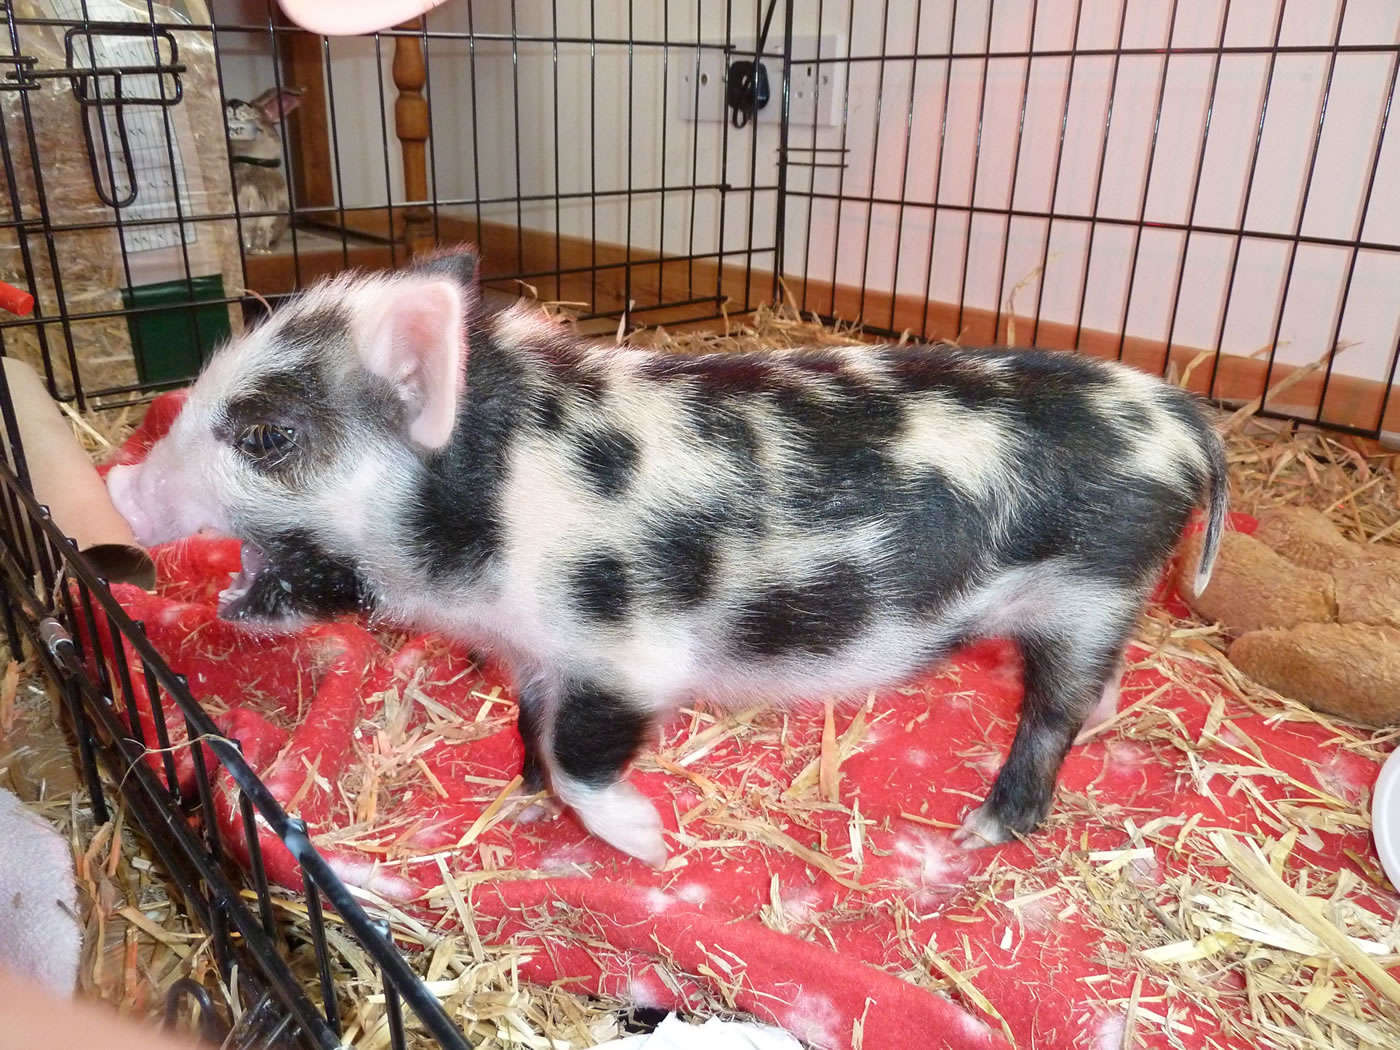 Picture of 11 day old Pet Kunekune pig.